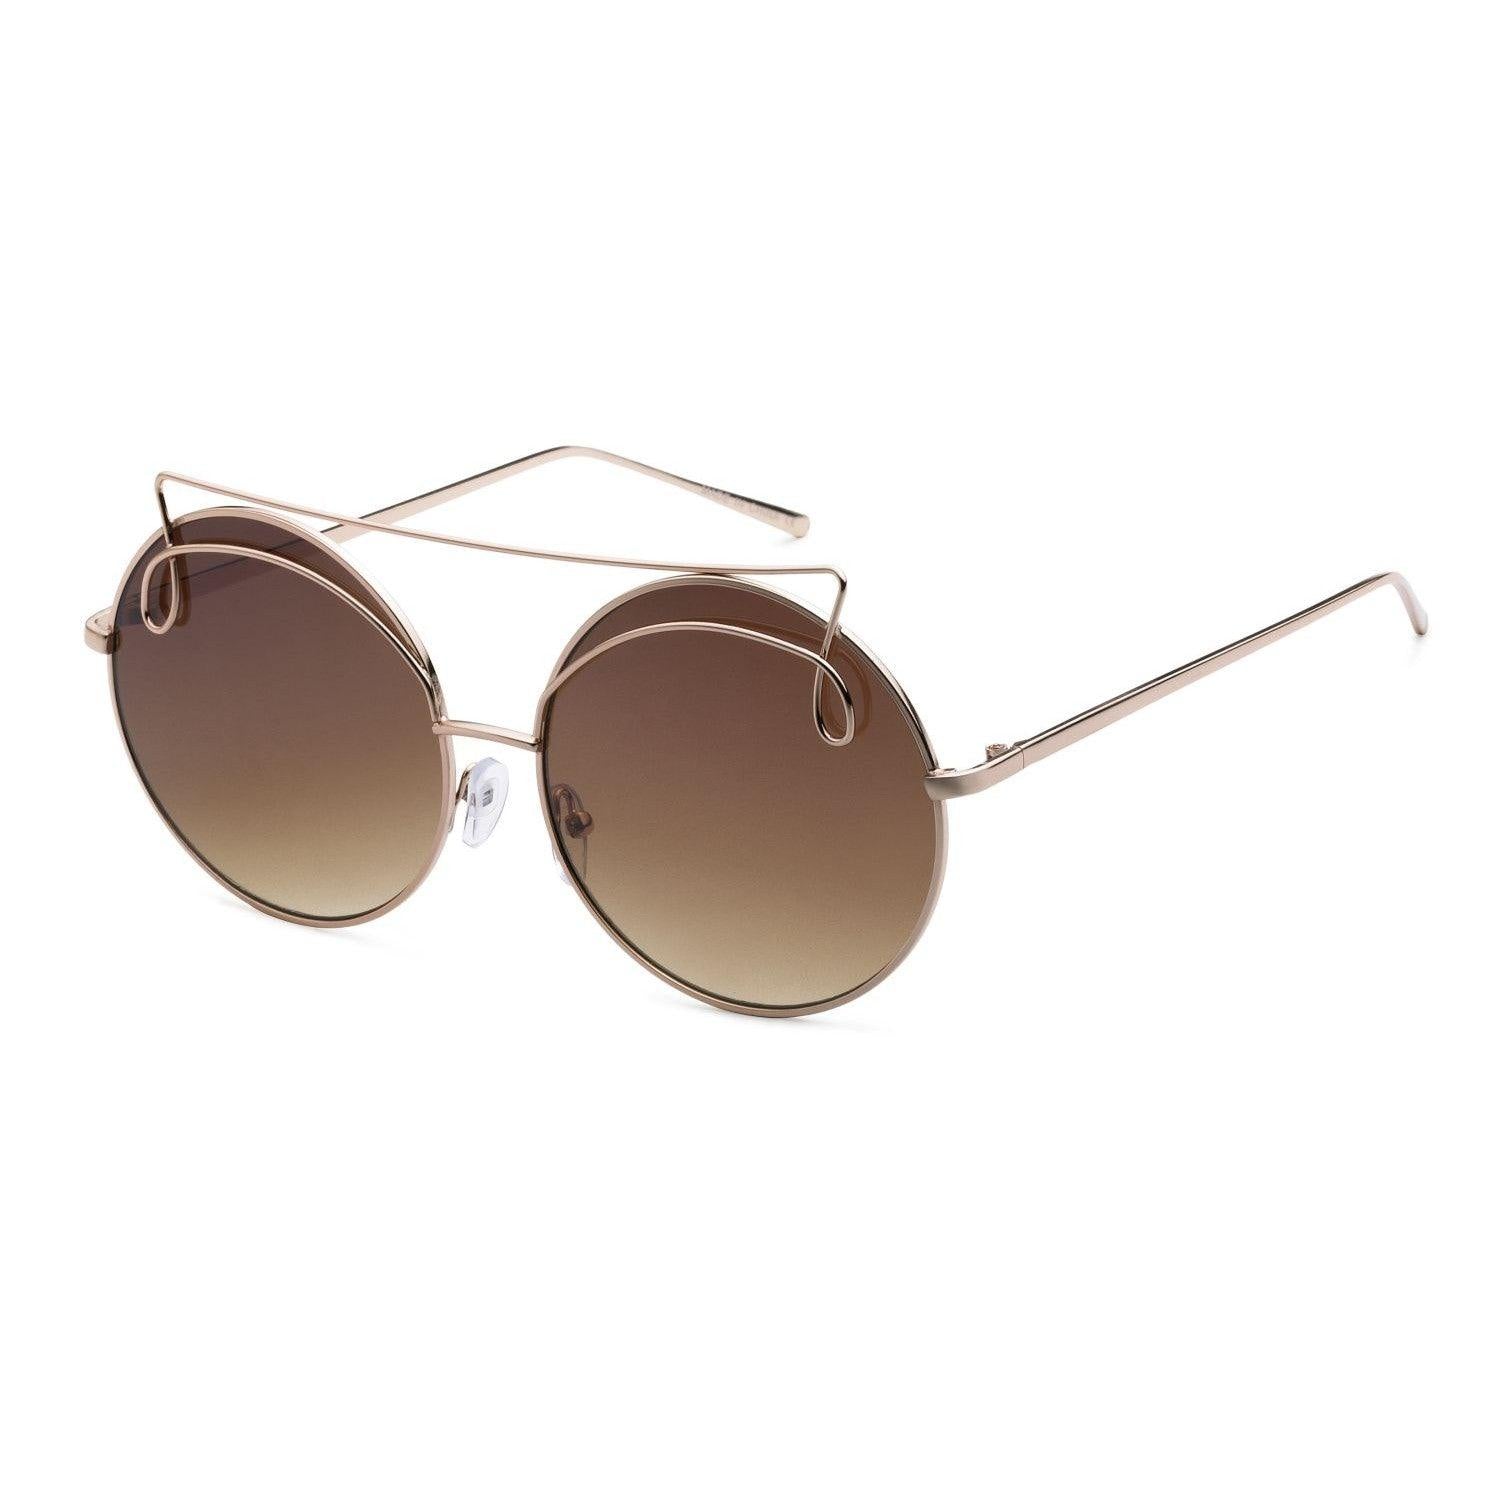 "Valerie" Metal Round Sunglasses - Weekend Shade Sunglasses